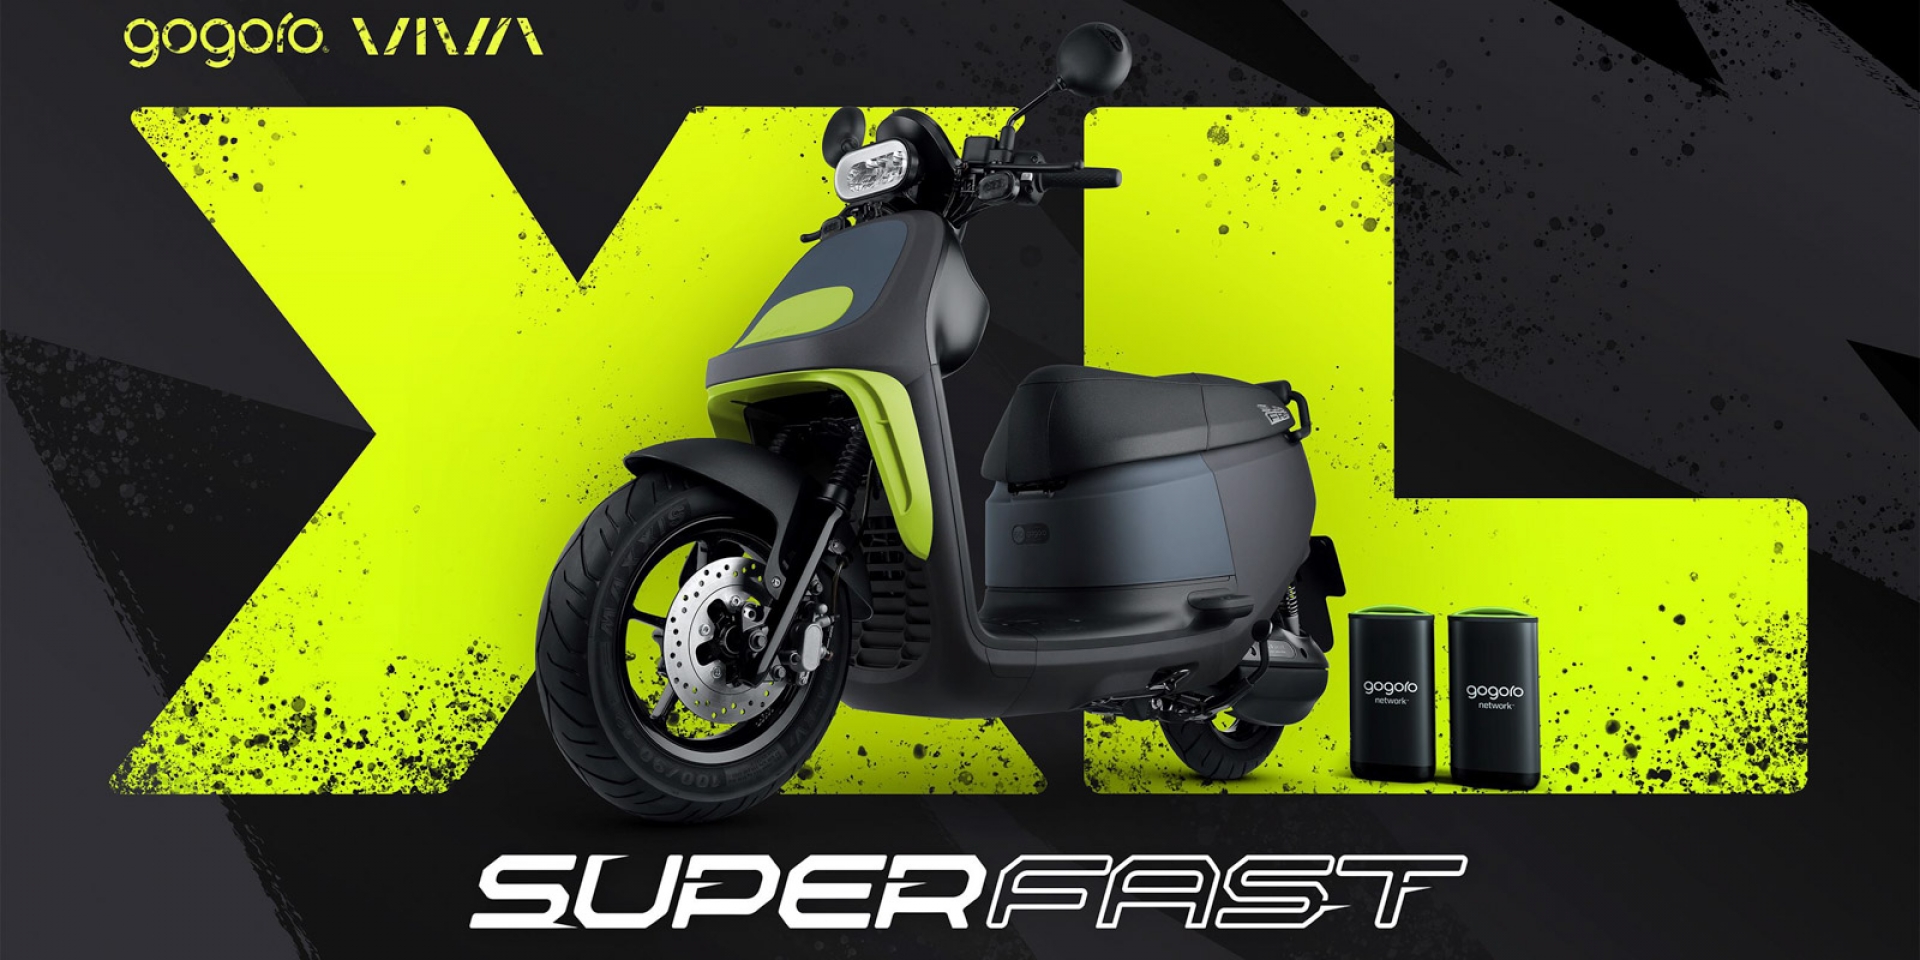 Gogoro VIVA XL SUPERFAST 建議售價91,980元 迎接暑期購車旺季 優惠好禮送不停